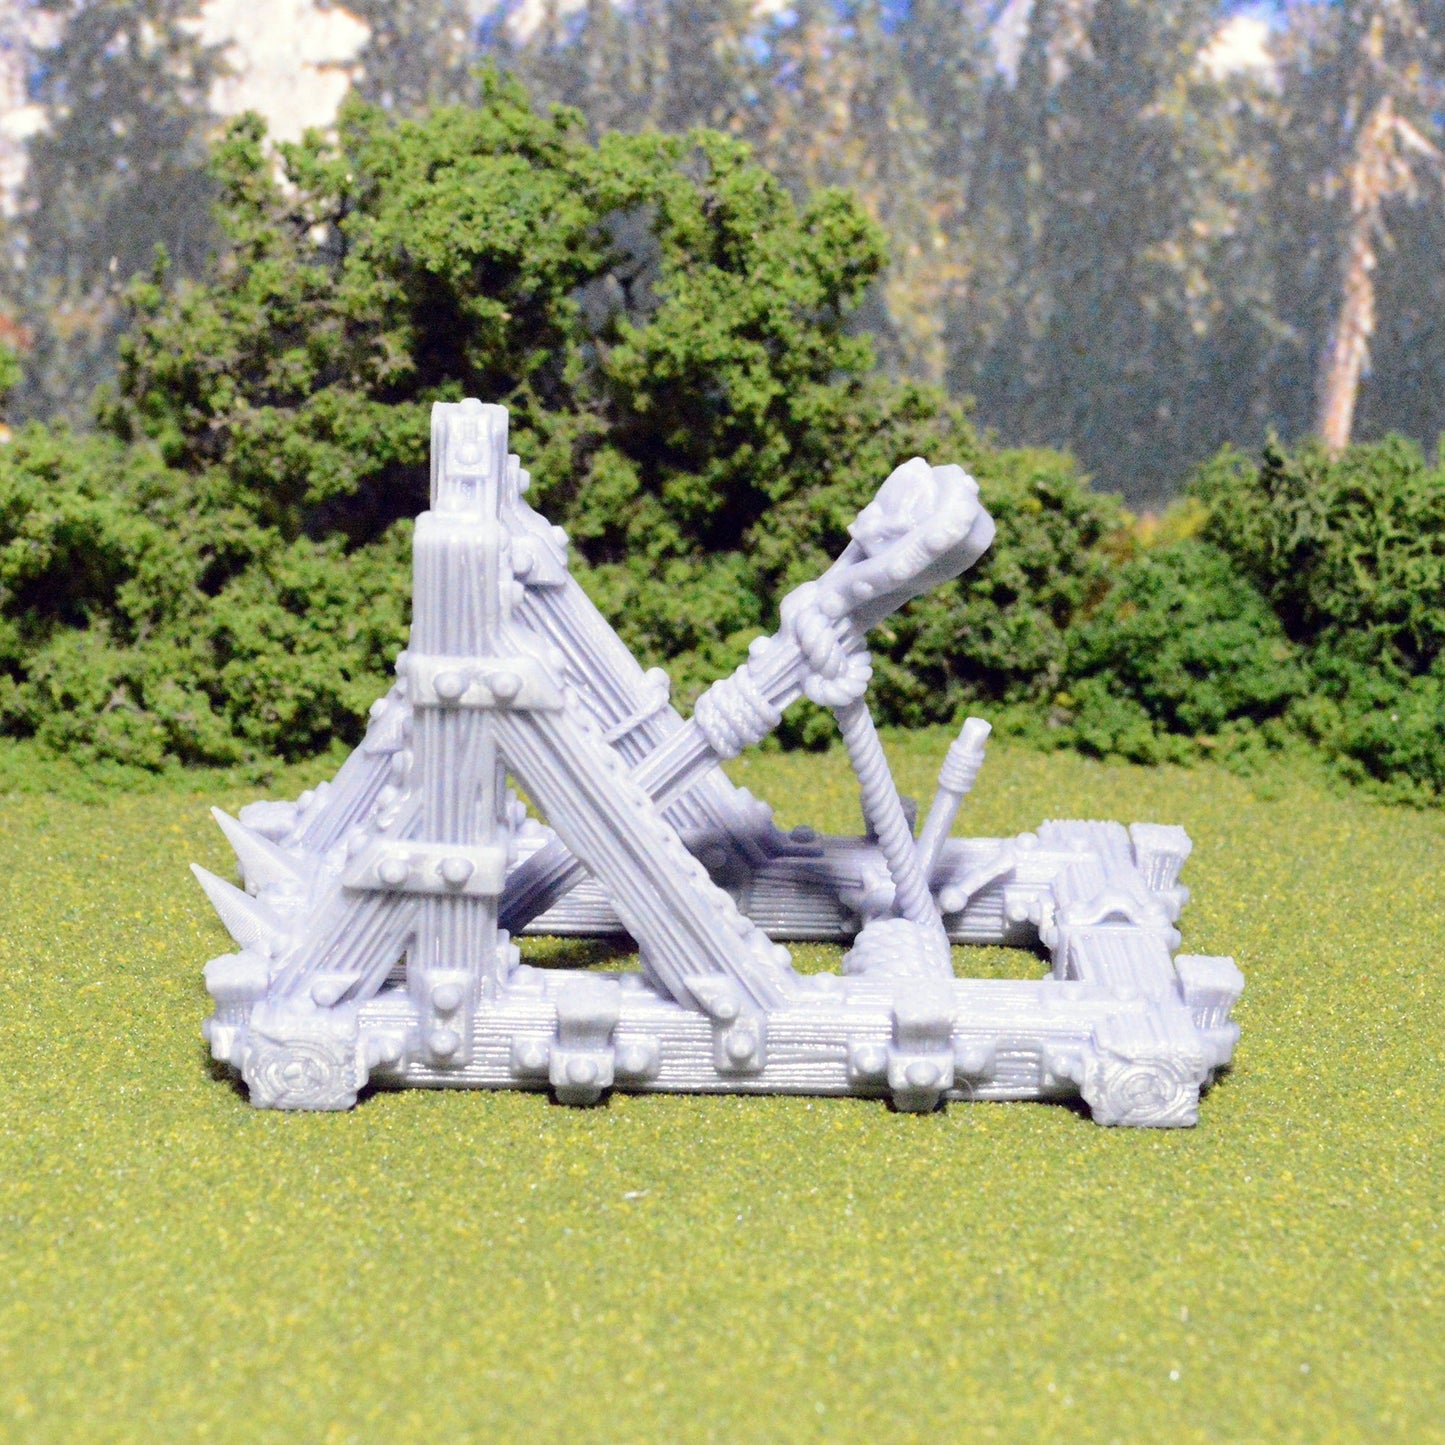 Miniature Catapult 15mm 28mm 32mm for Wargaming, Siege Engine for D&D DnD Wargame Terrain, Medieval Skirmish Battle Props